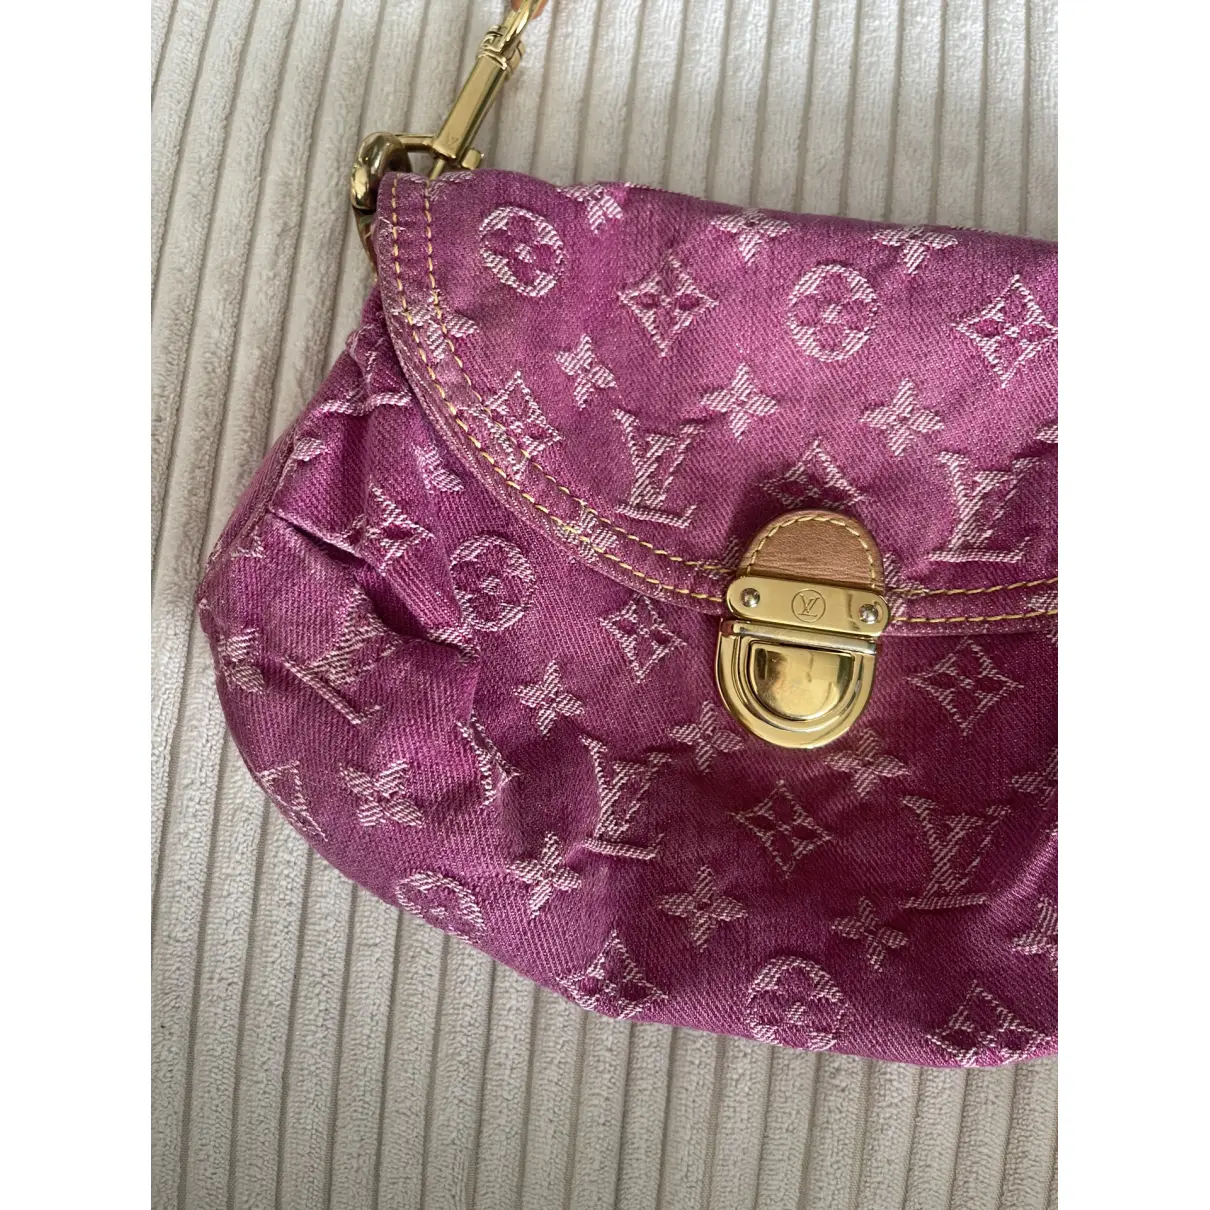 Buy Louis Vuitton Pleaty handbag online